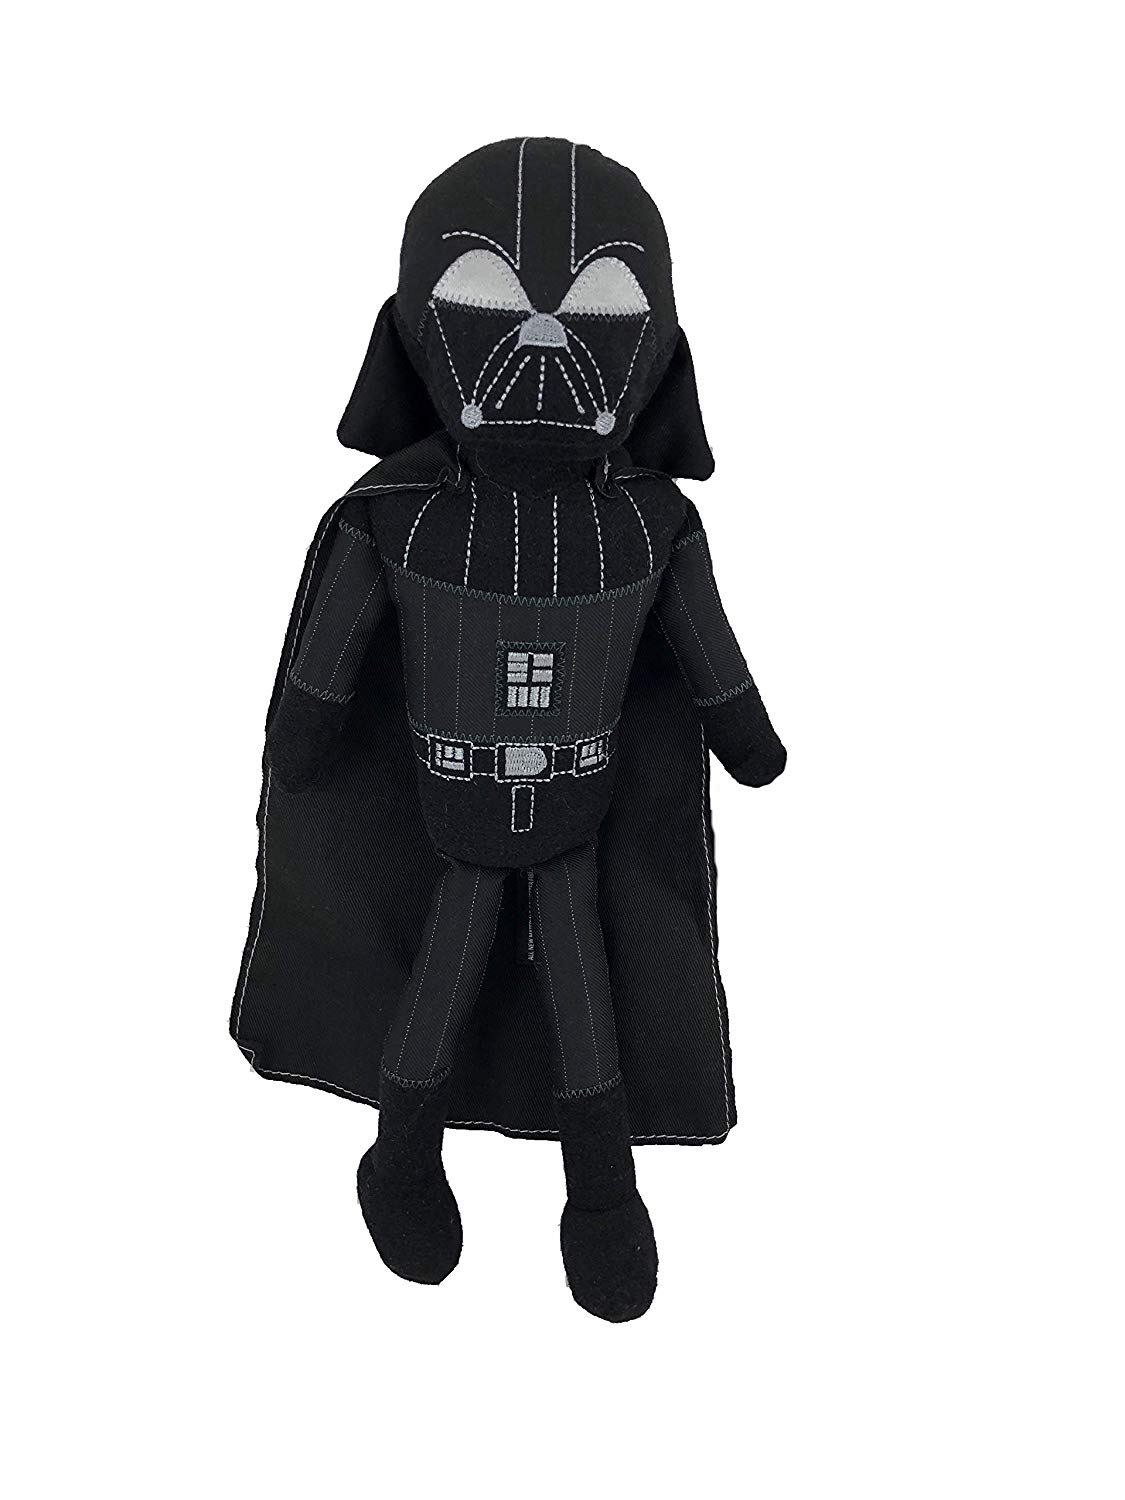 SW GE Darth Vader Plush Figure 1